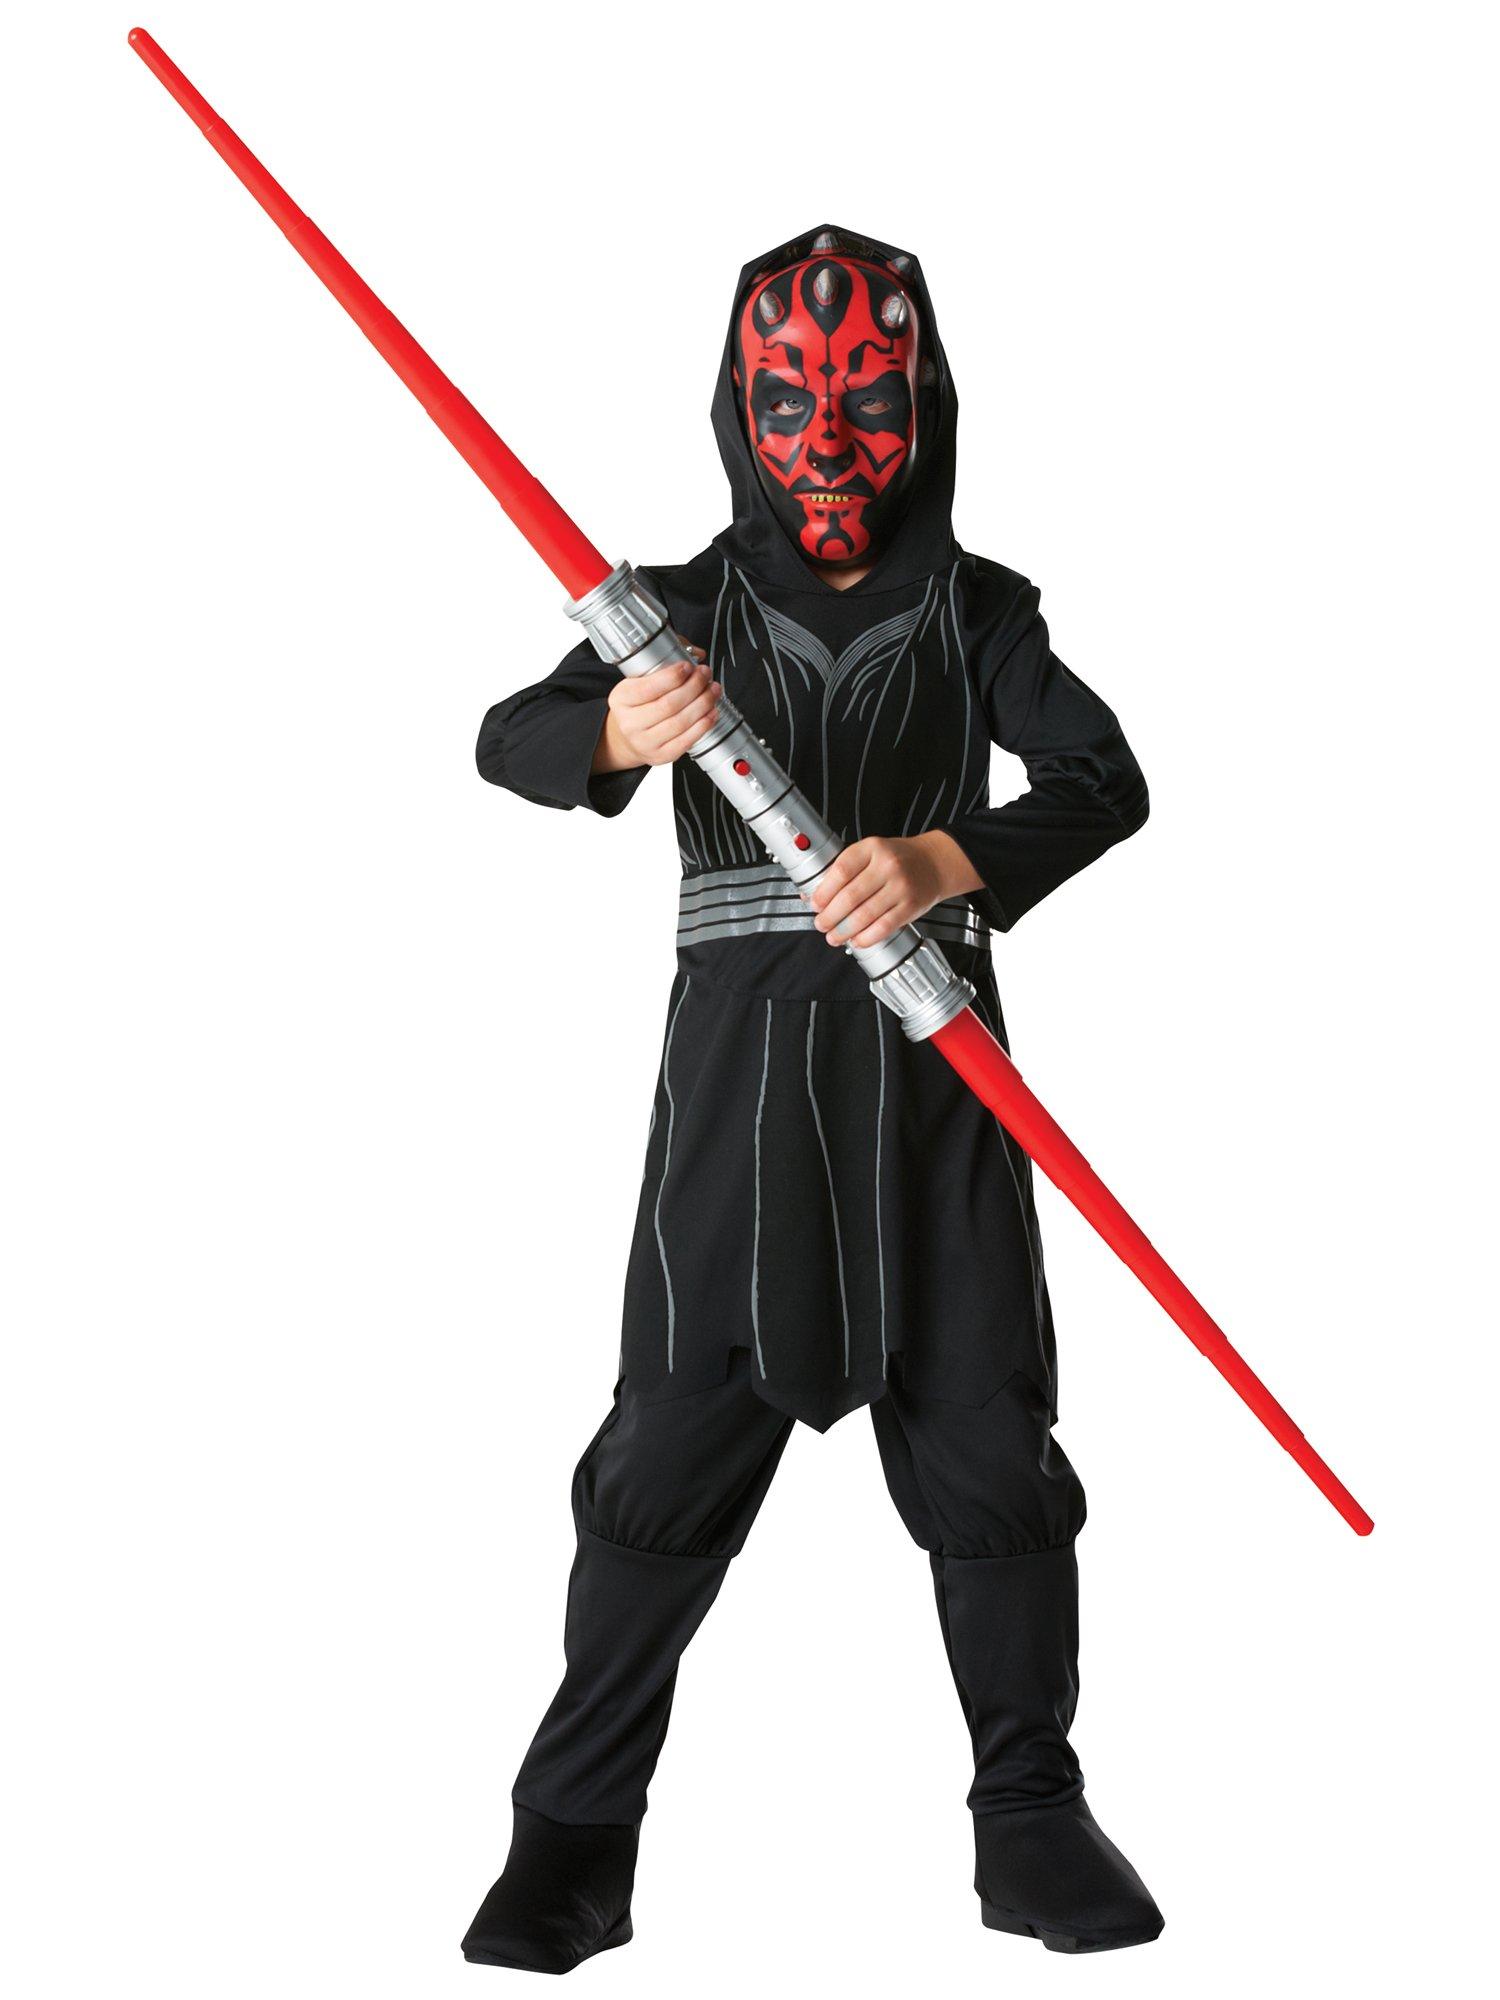 Darth Maul Costume From Star Wars The Phantom Menace